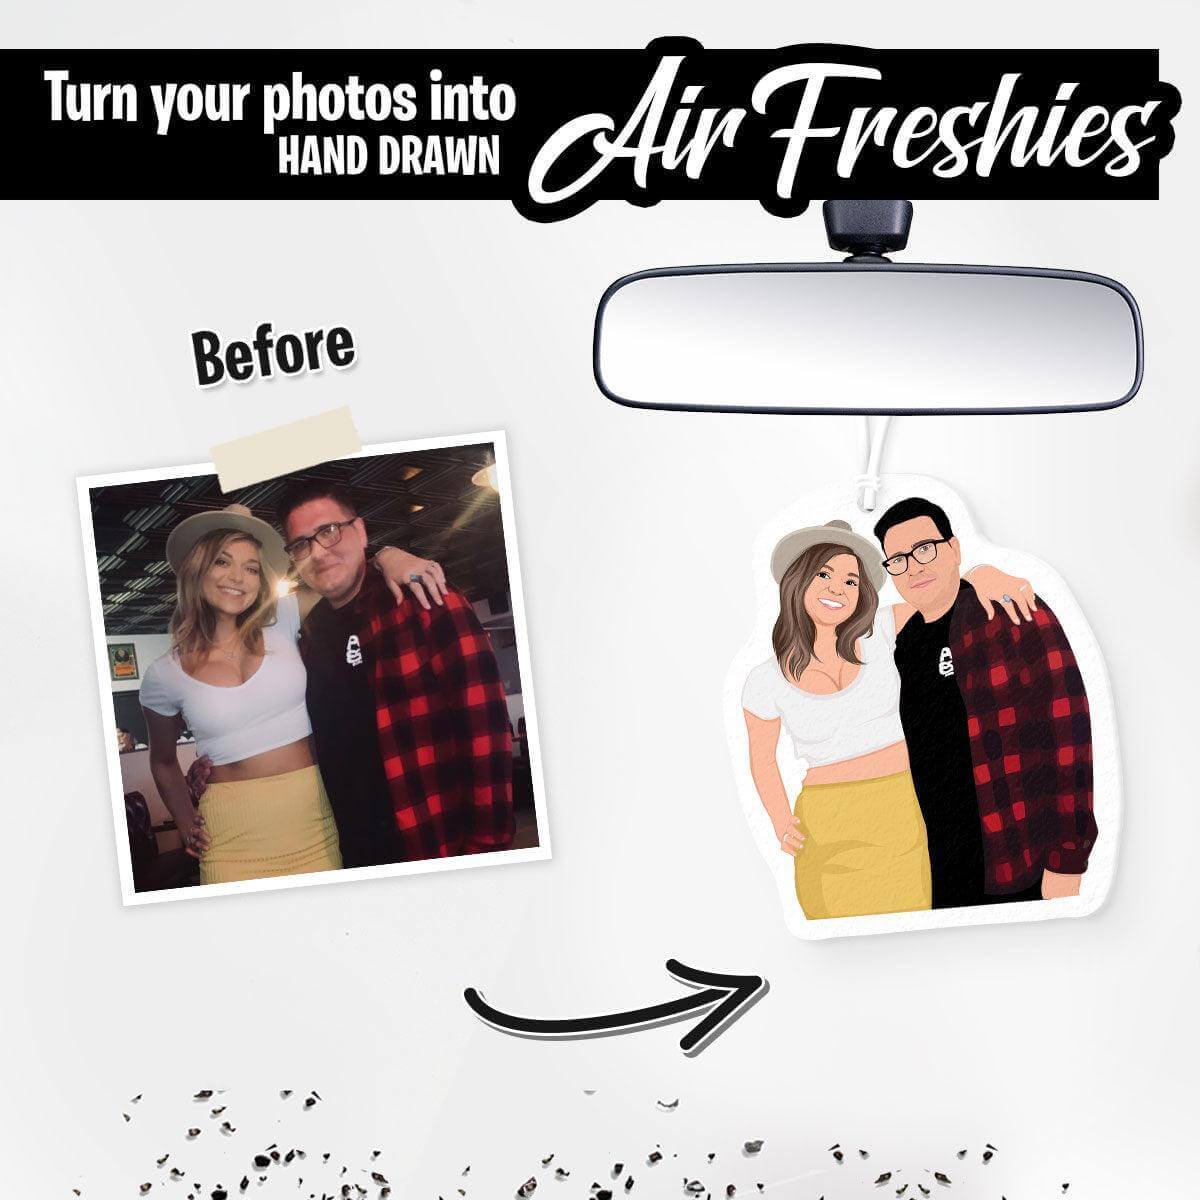 Custom Couples Portrait Air Freshener